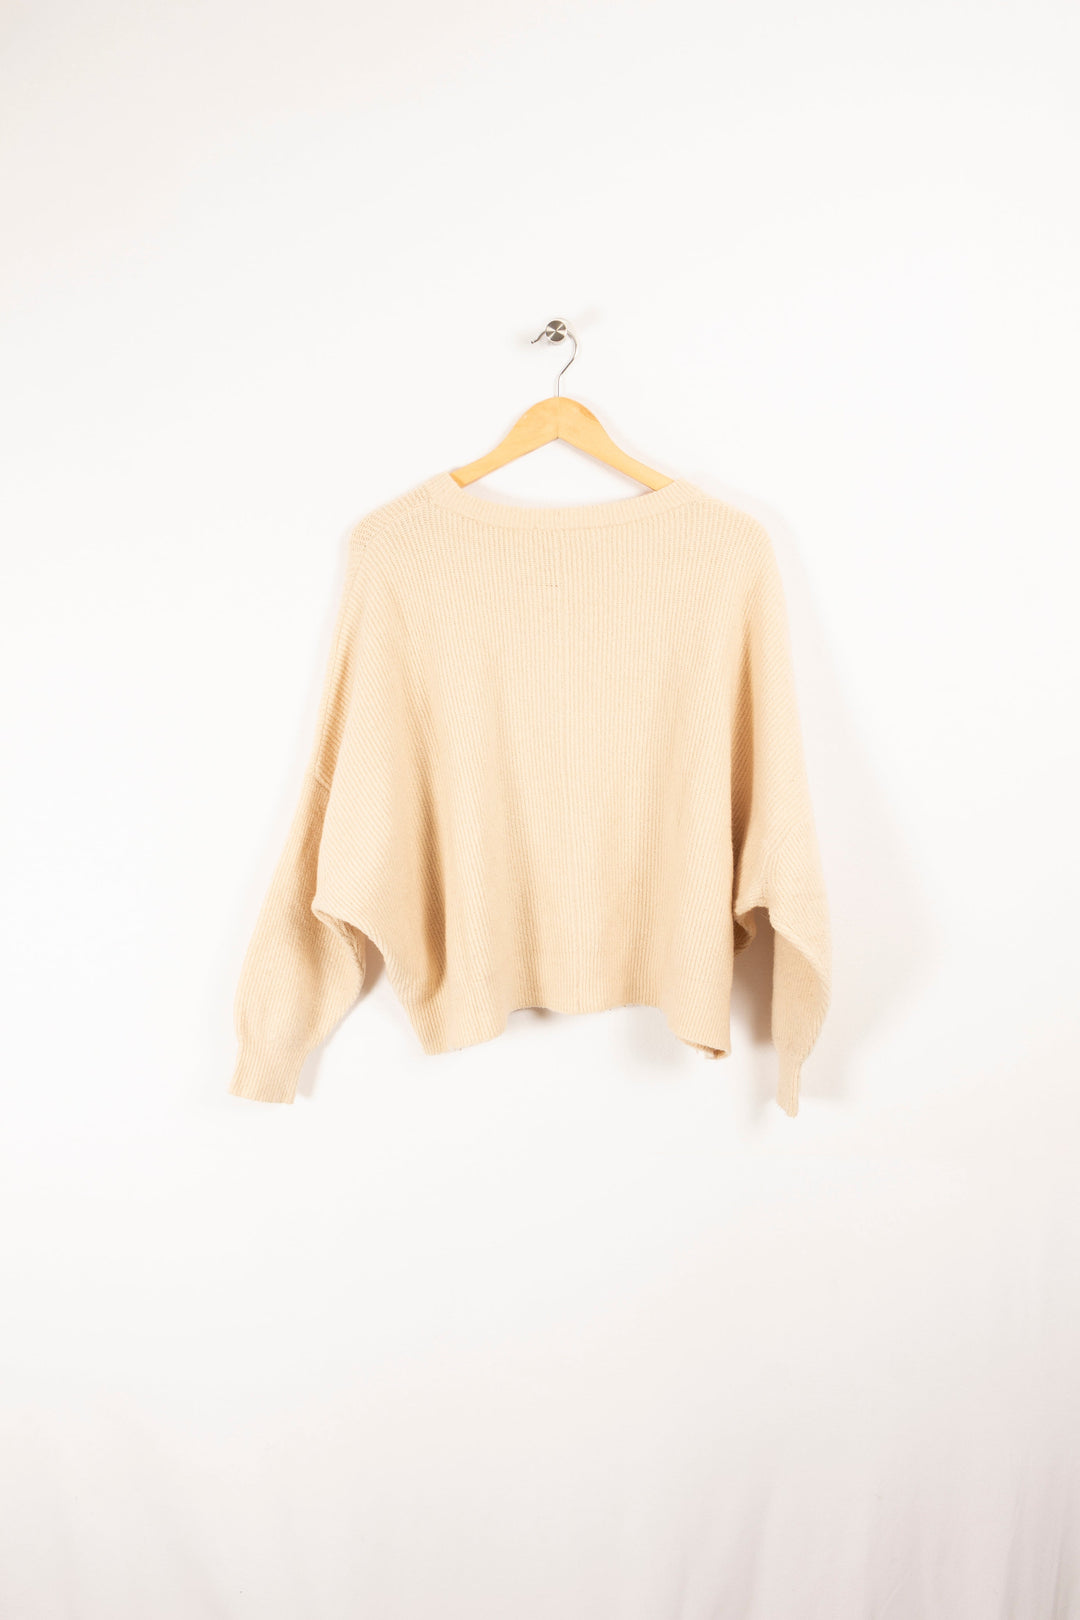 White sweater - S/36